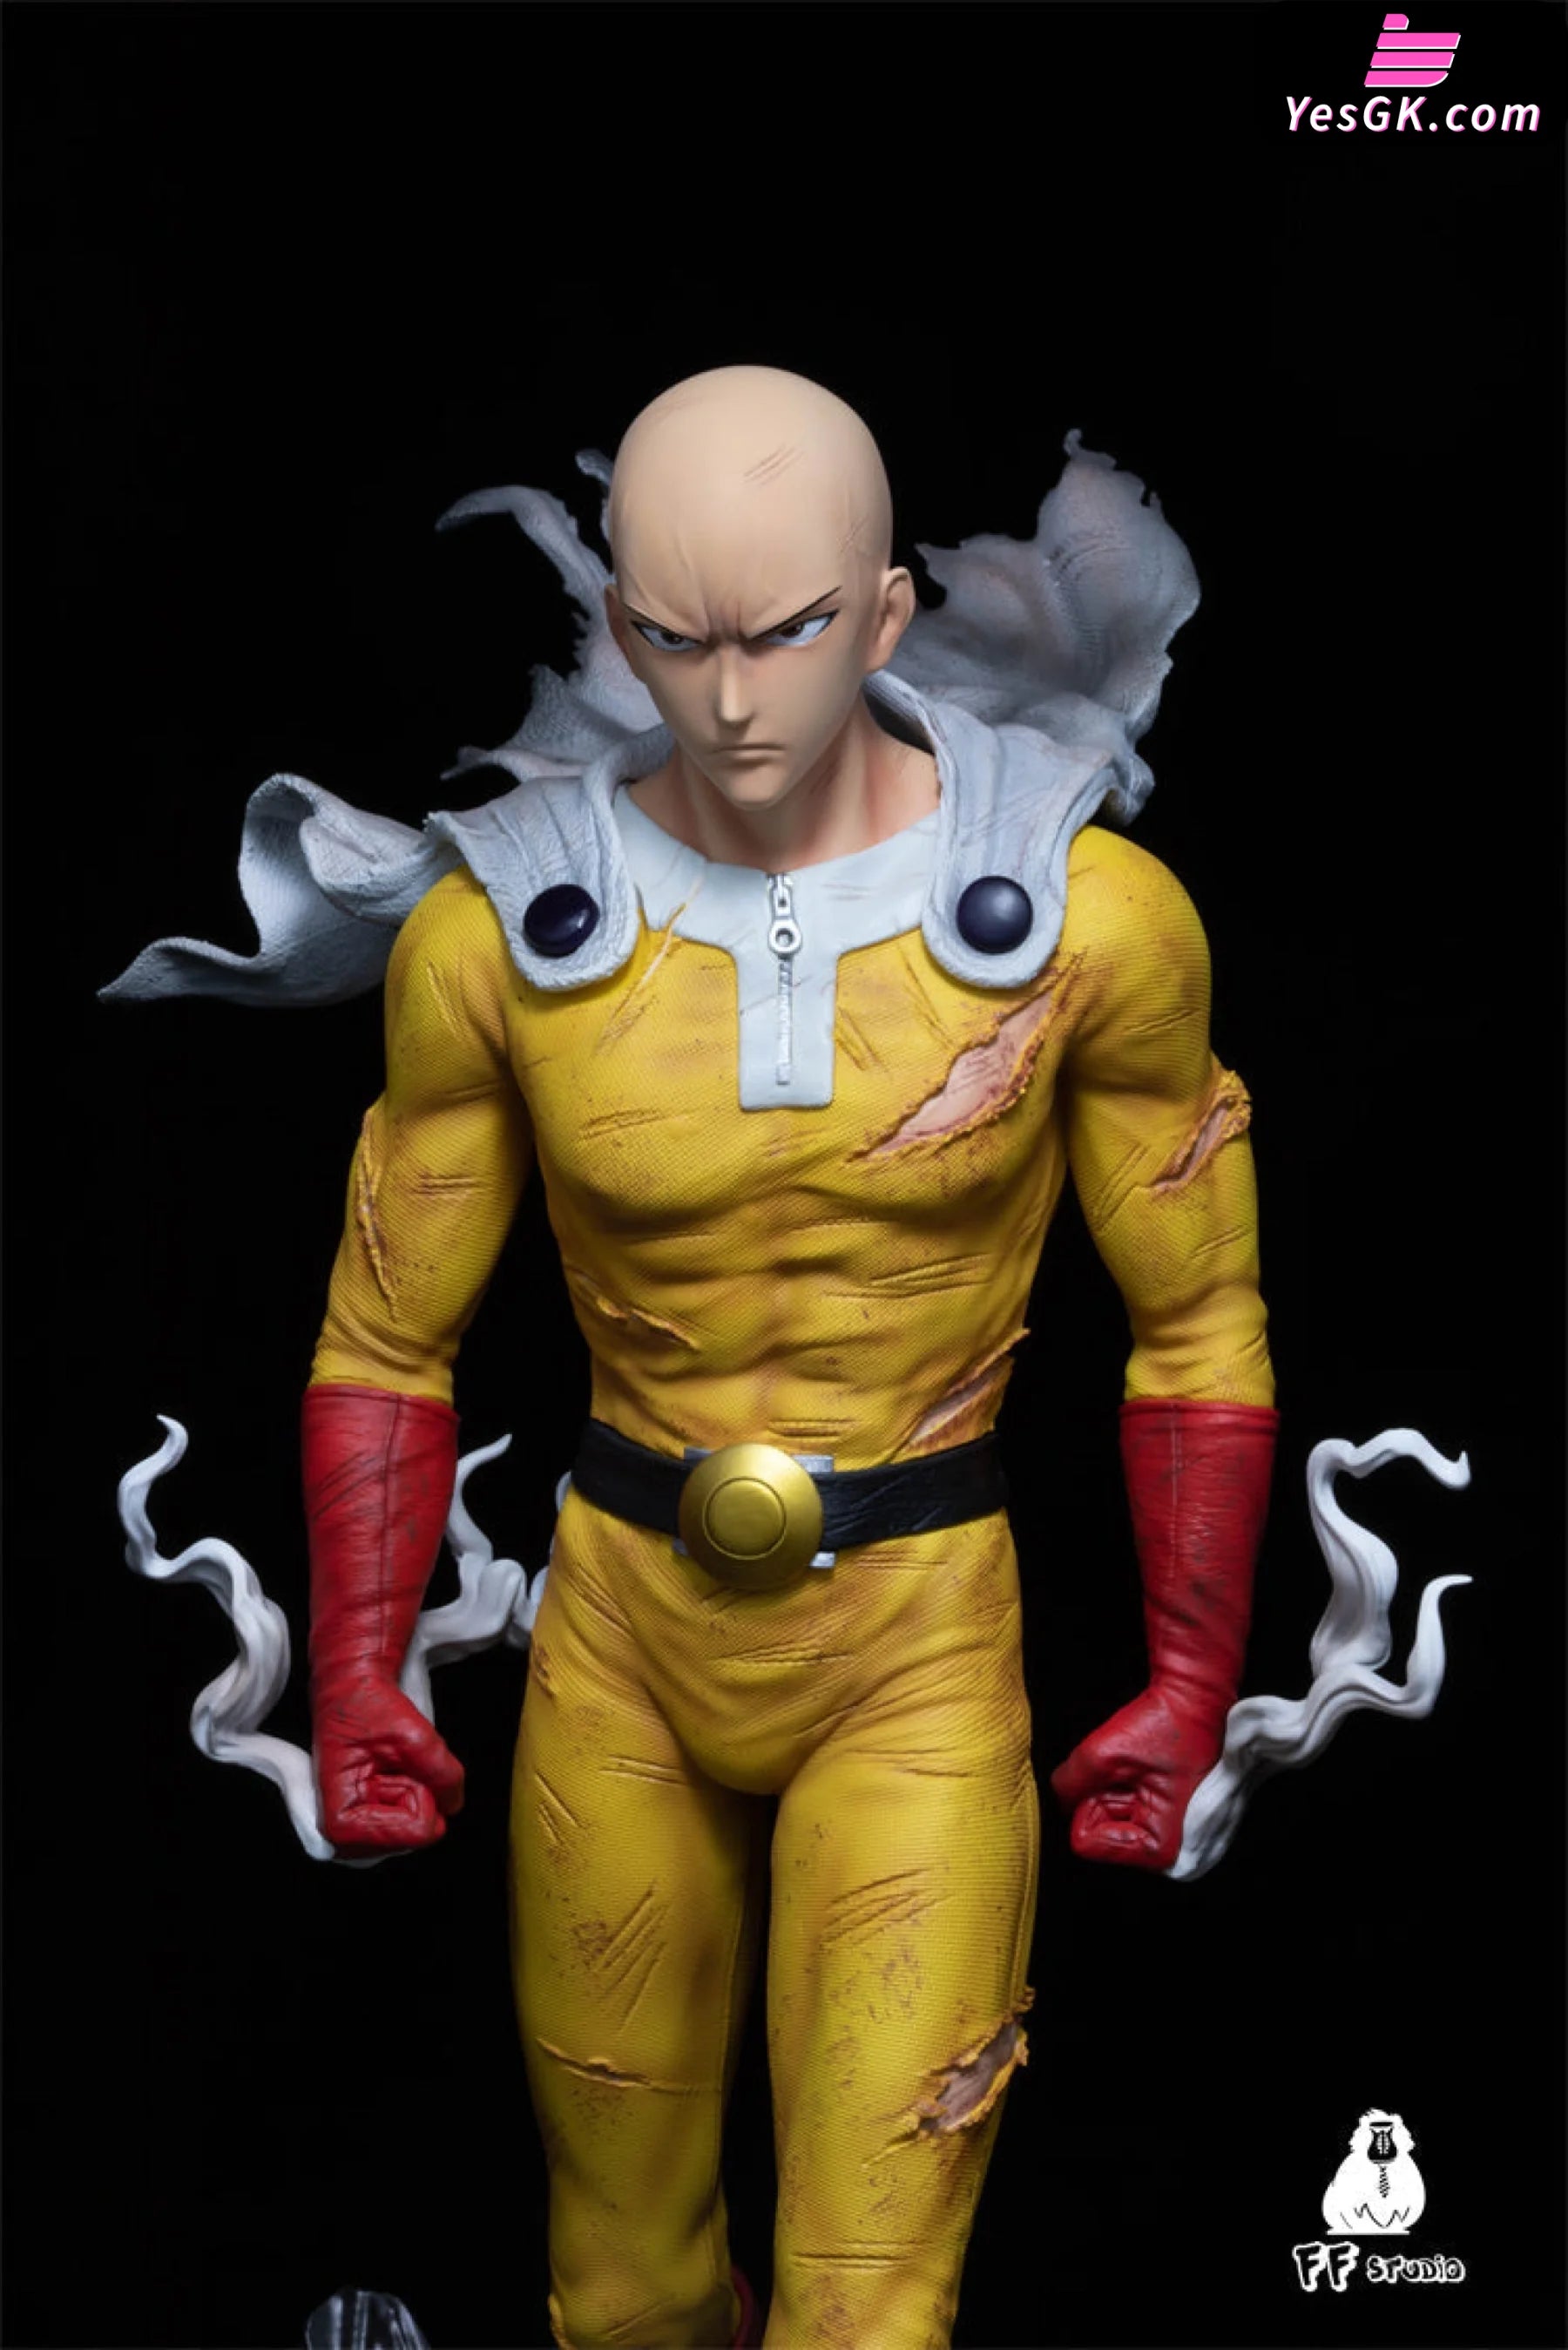 One Punch Man GK Figures - 25cm Saitama Action Figure